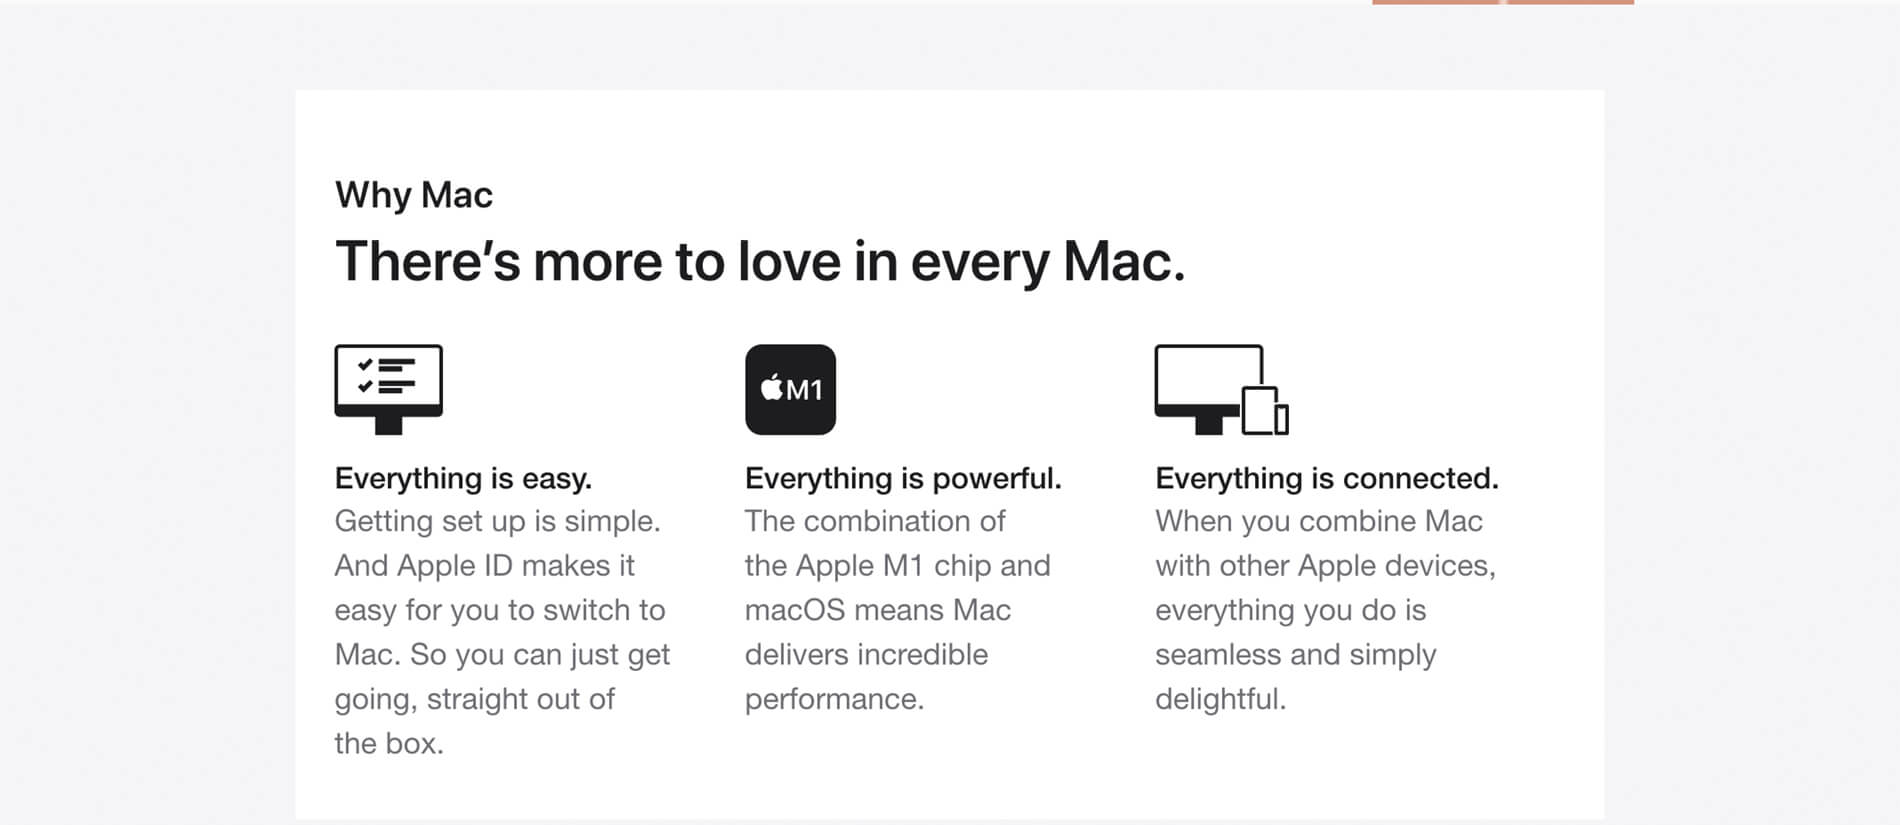 Say hello to iMac